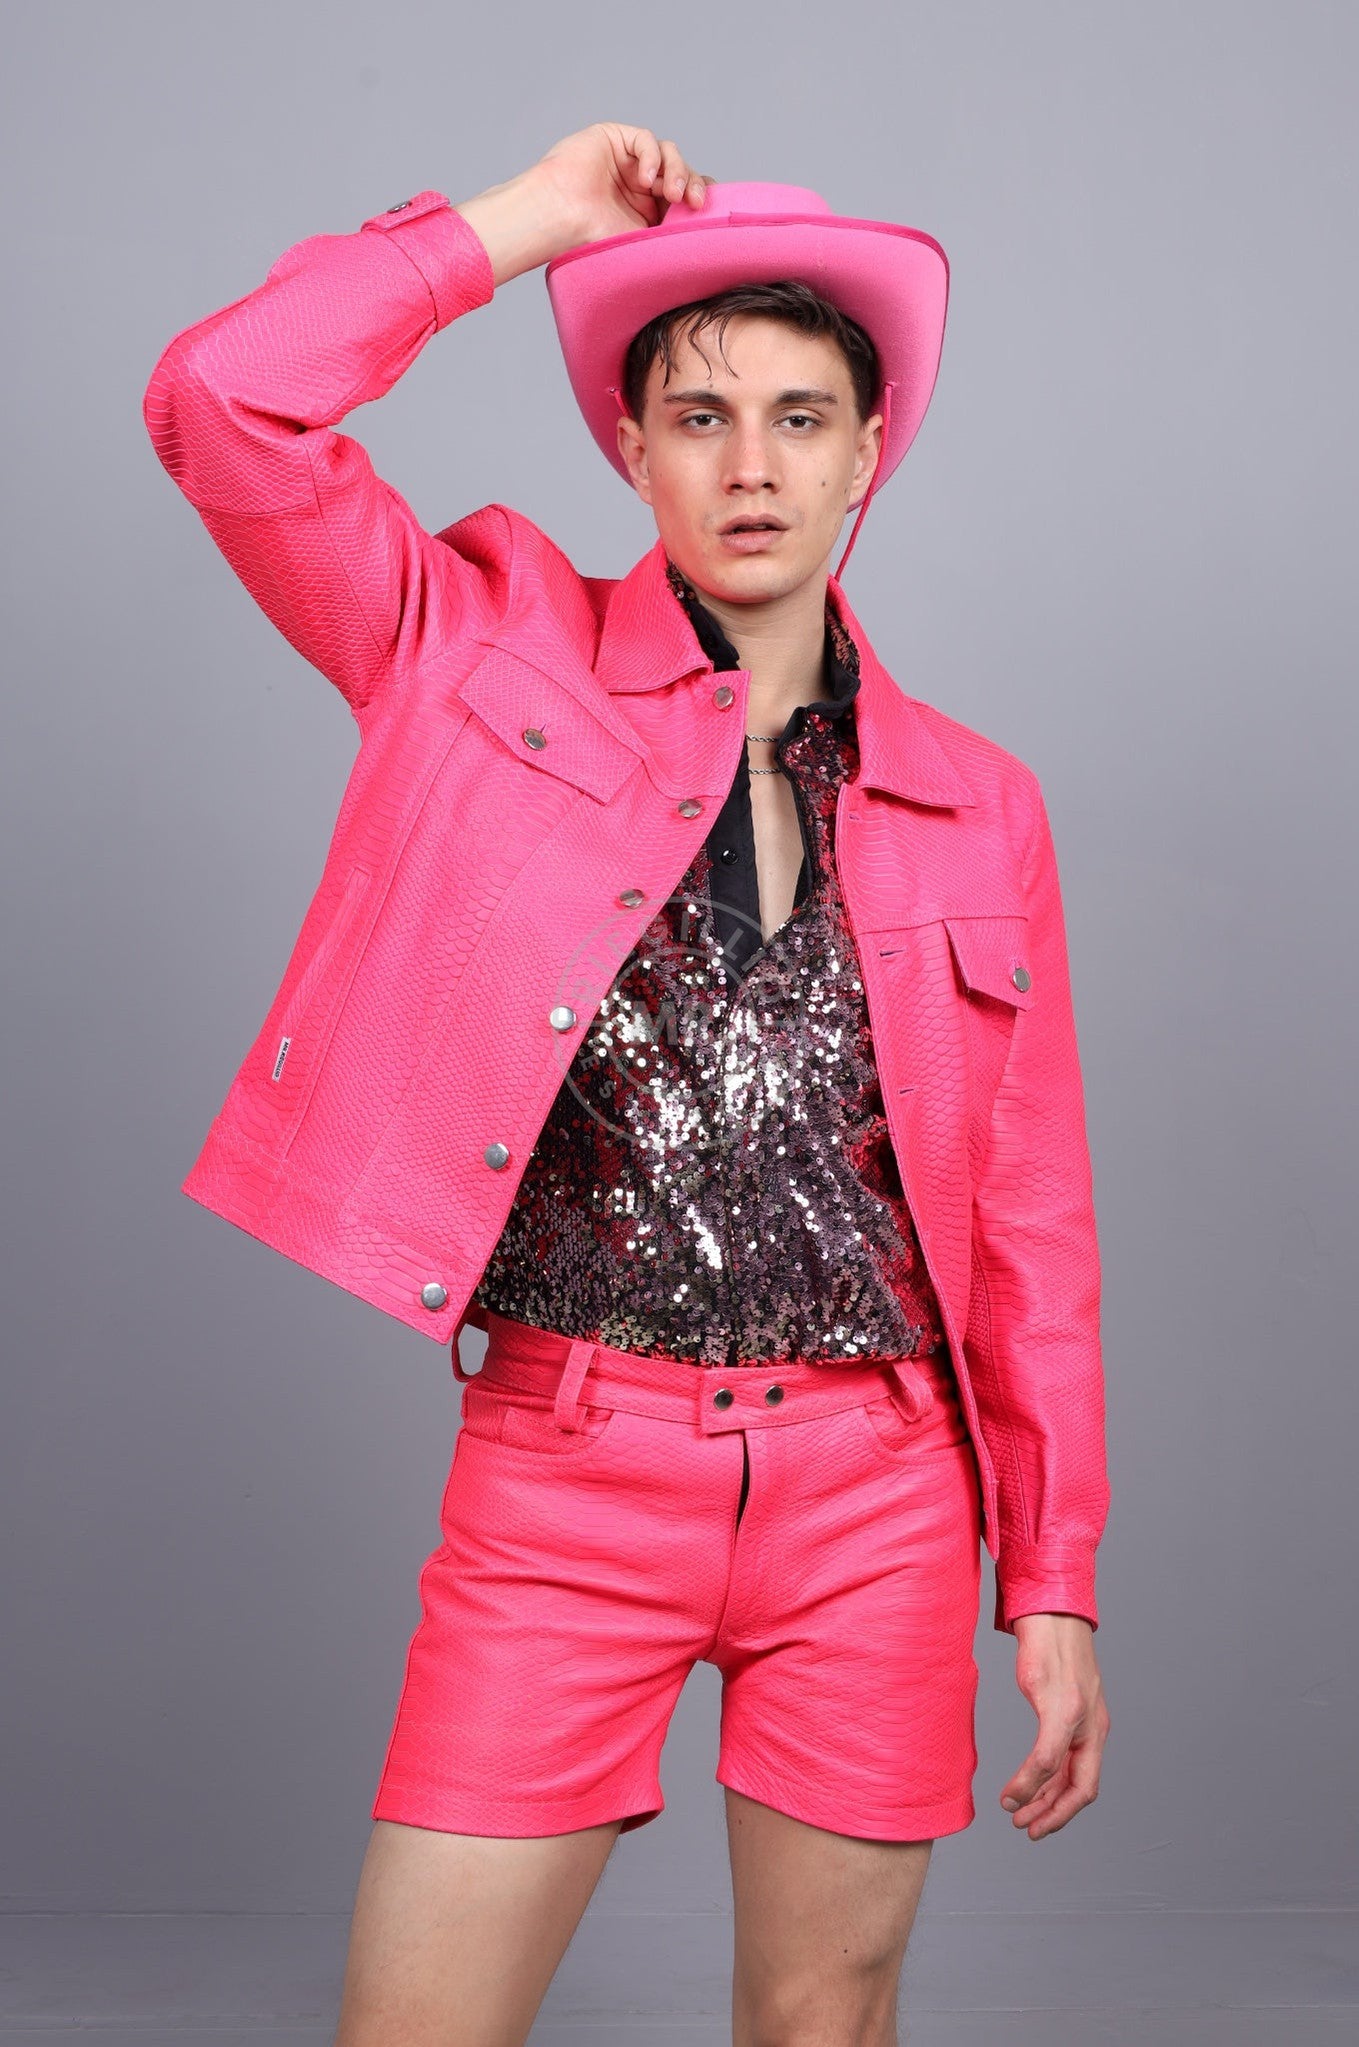 Leather Snake Trucker Jacket - Neon Pink at MR. Riegillio